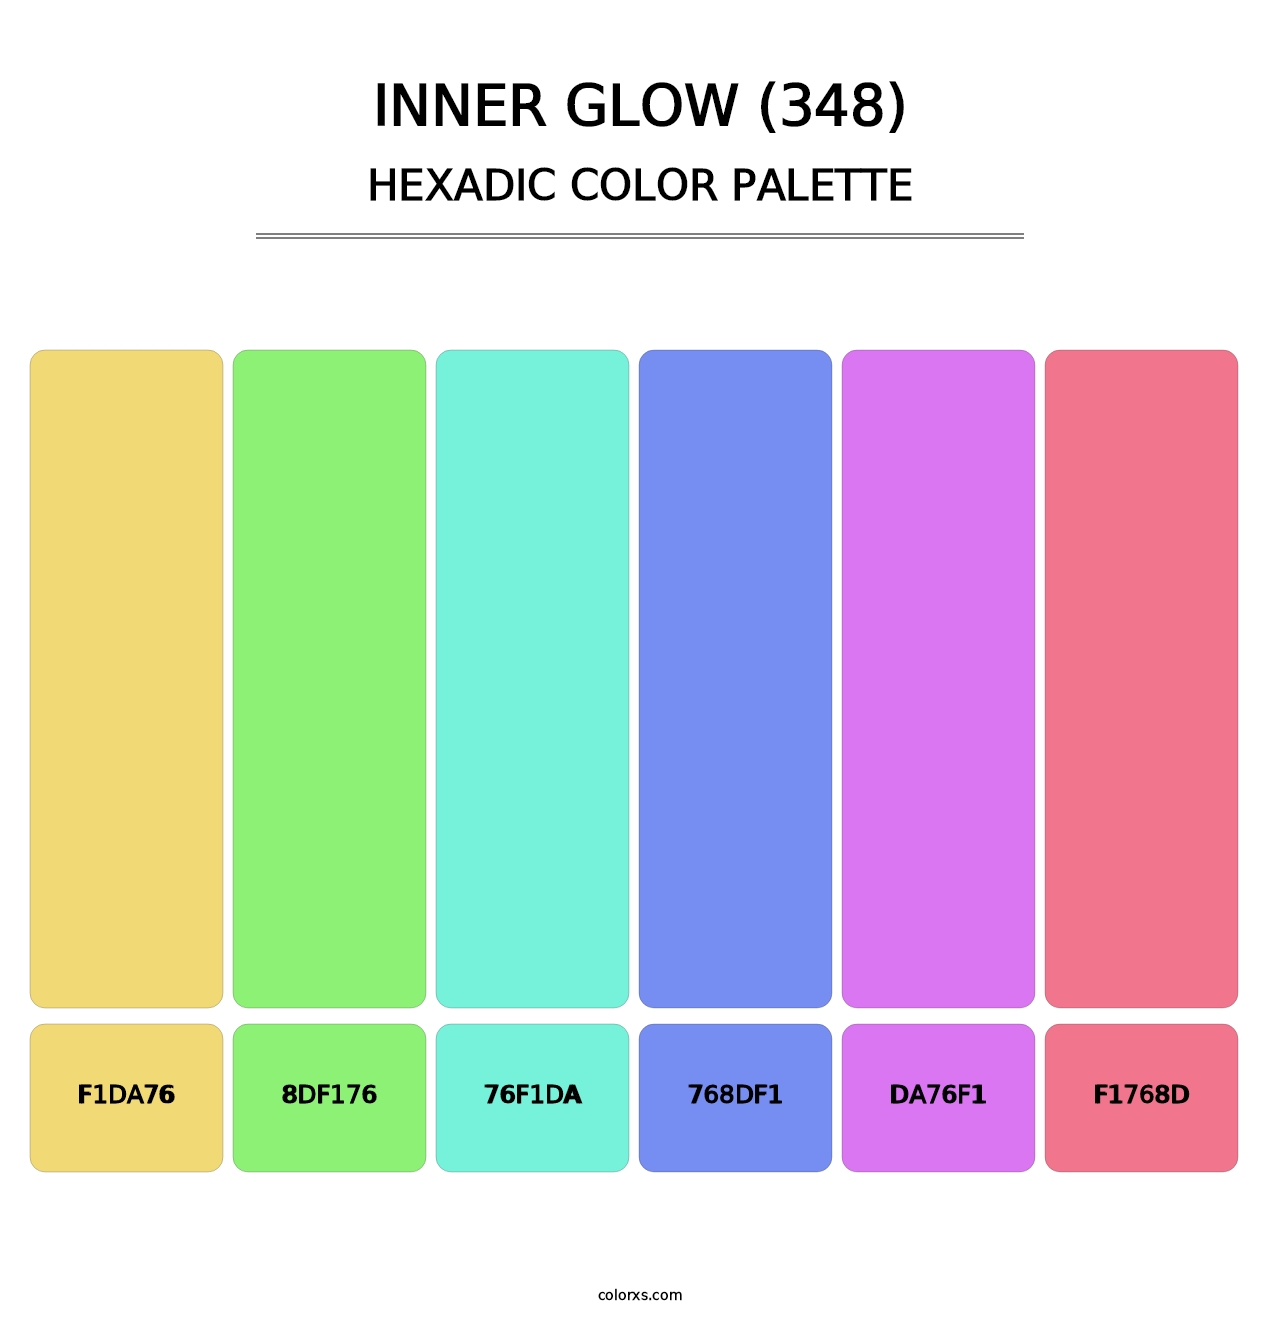 Inner Glow (348) - Hexadic Color Palette